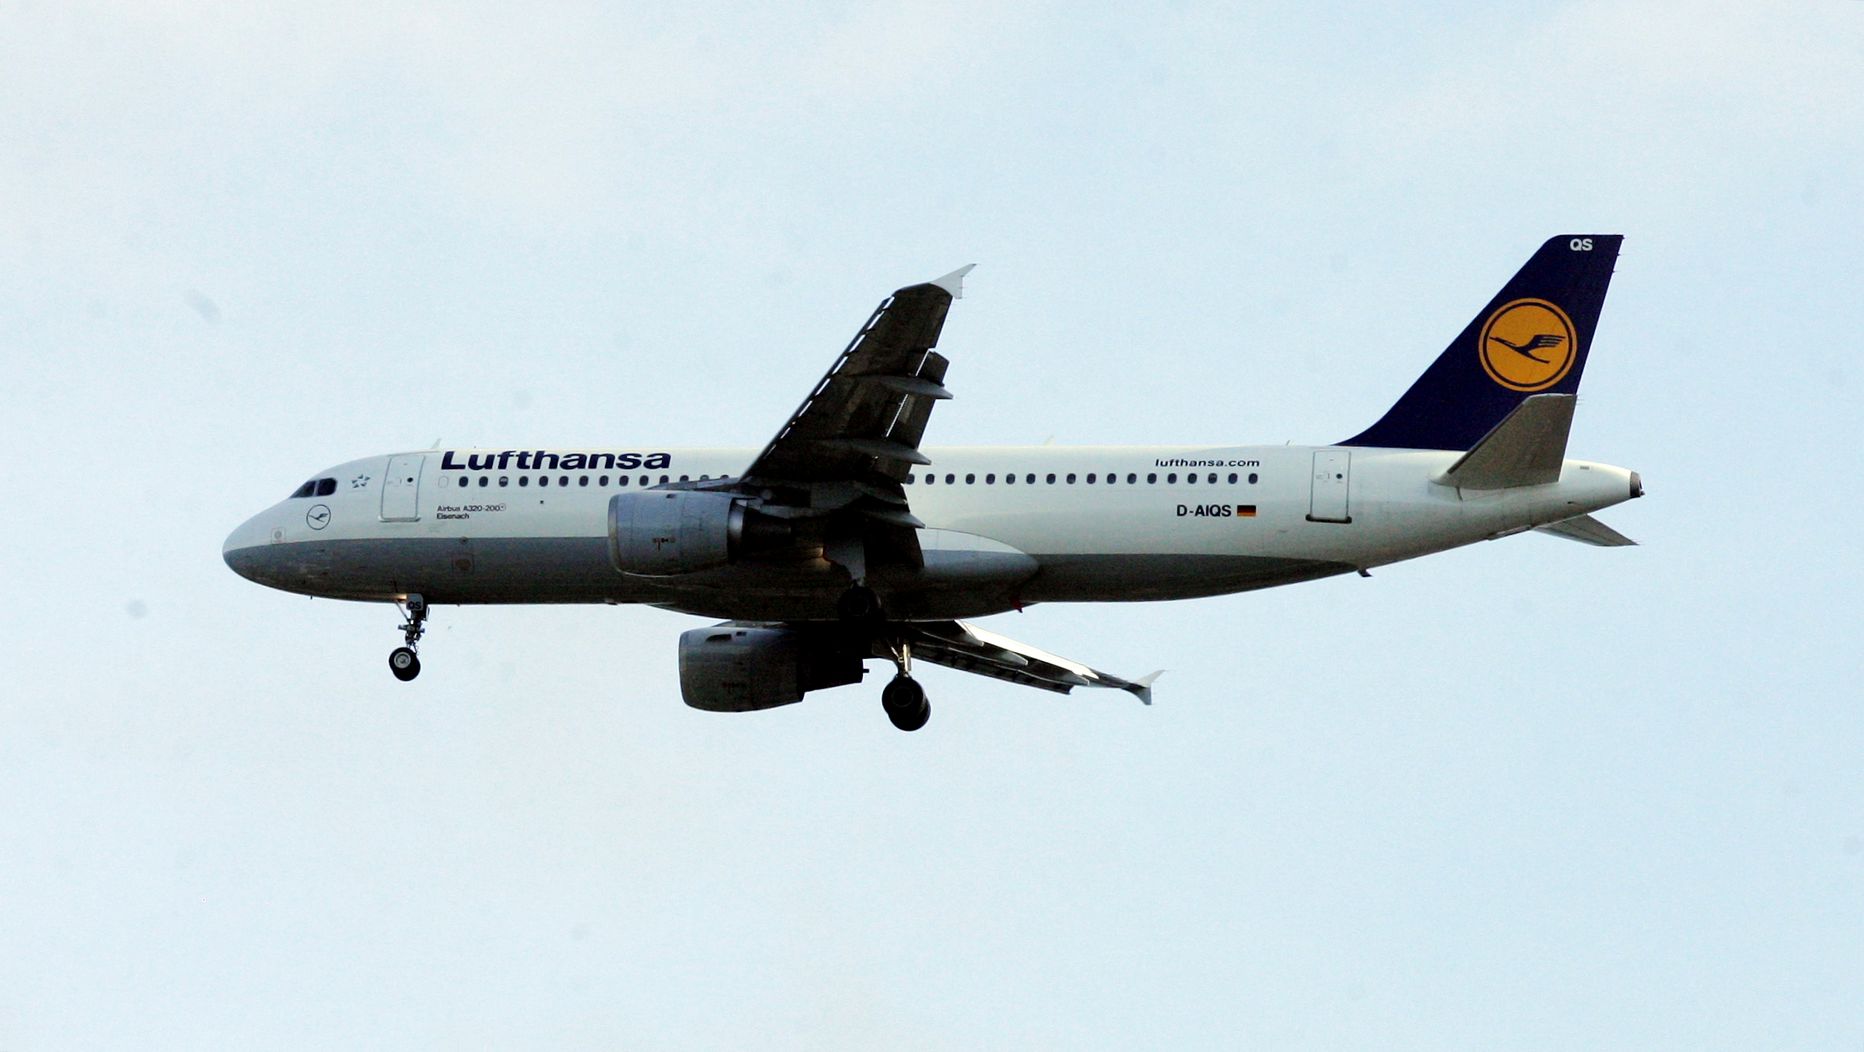 Lufthansa lennuk Tallinna lennujaama lähistel.